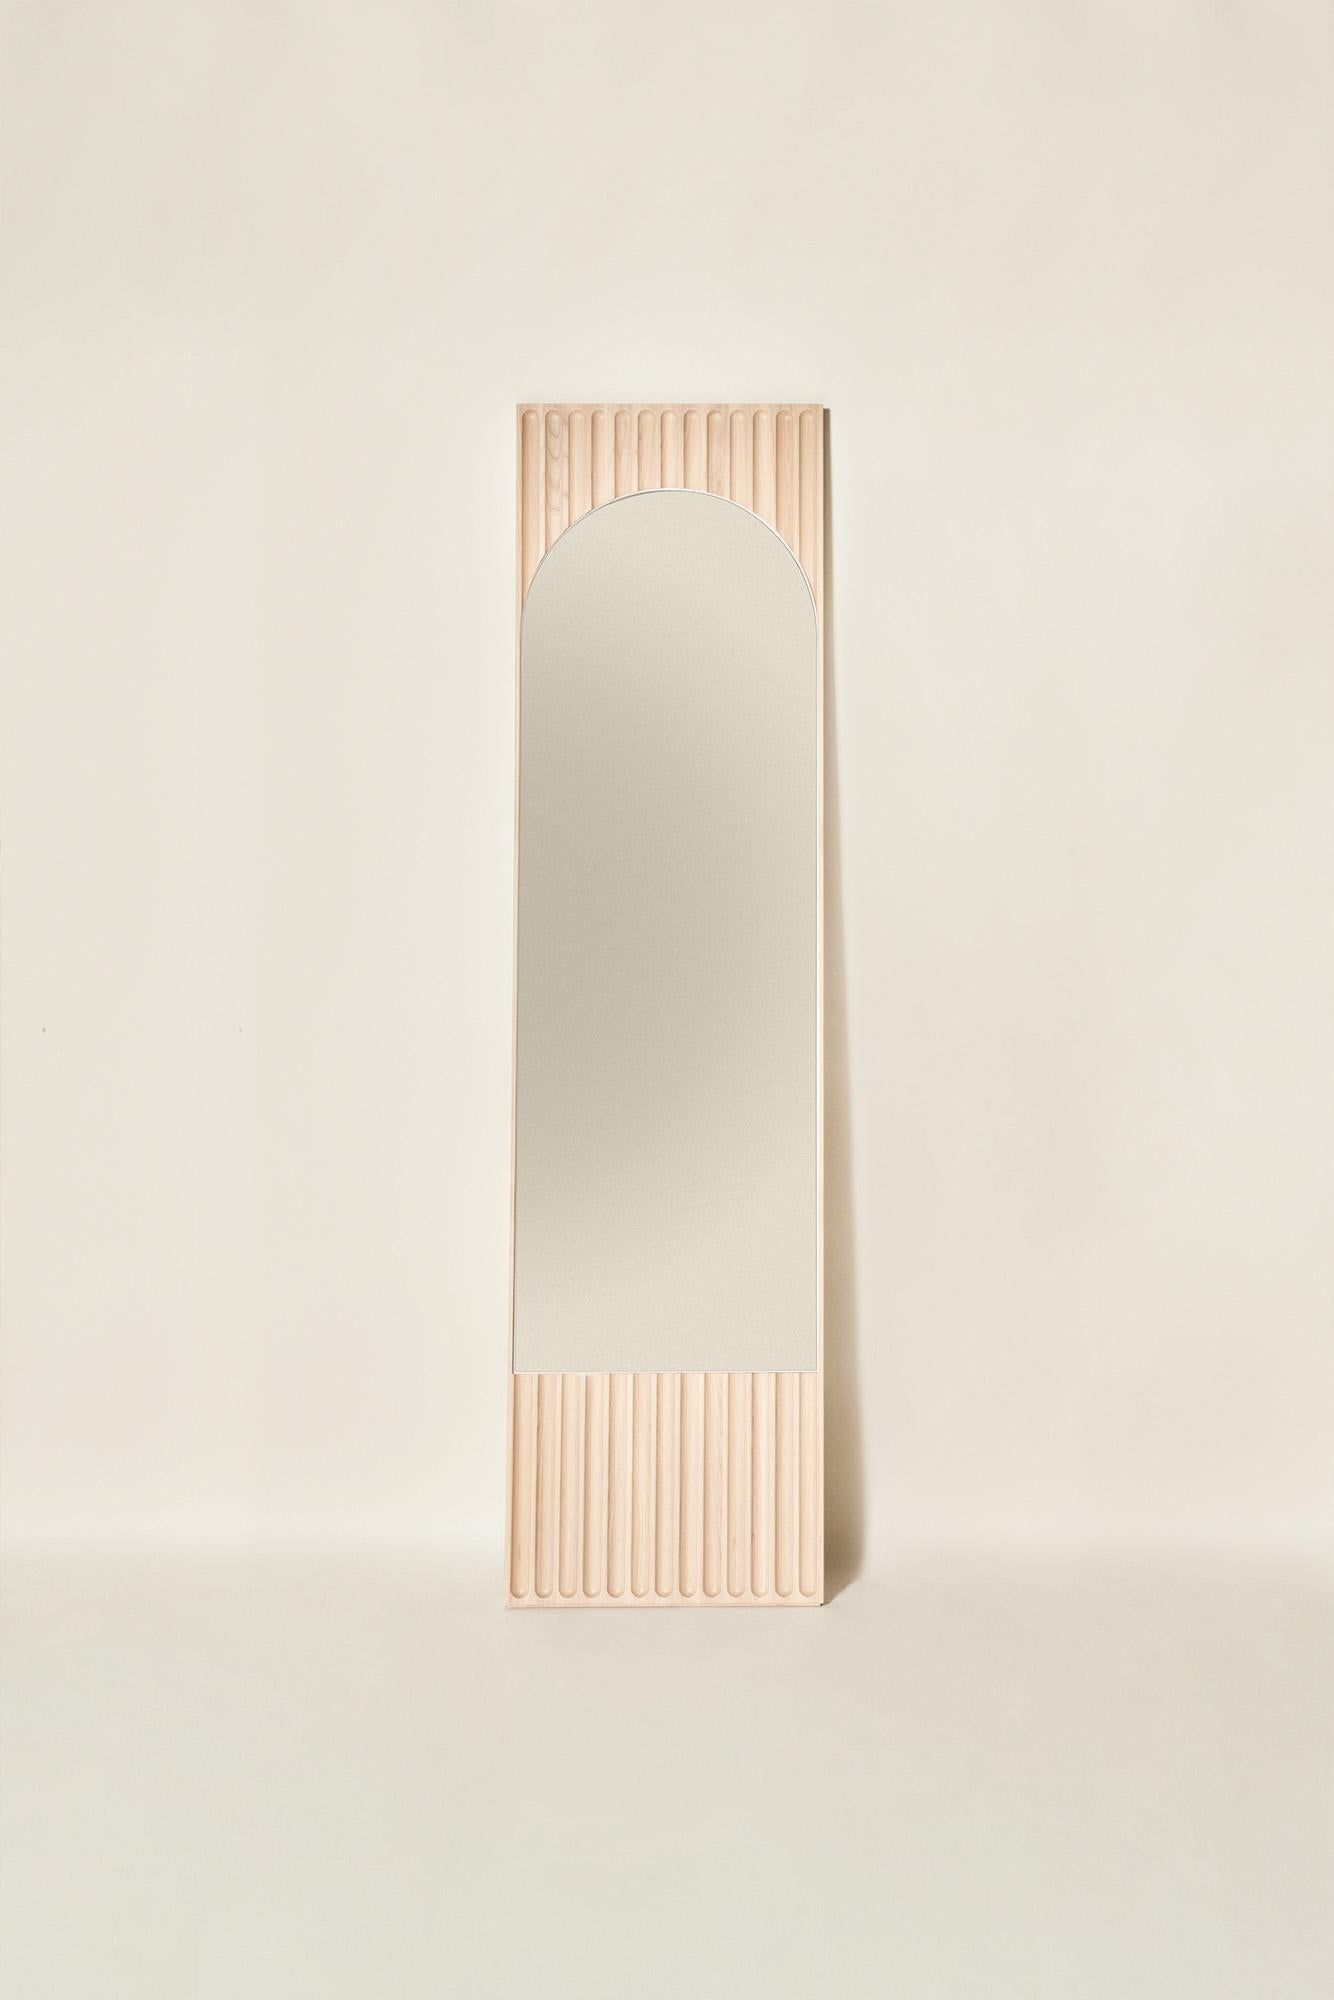 Tutto Sesto Solid Wood Rectangular Mirror, Ash in Black Finish, Contemporary For Sale 1